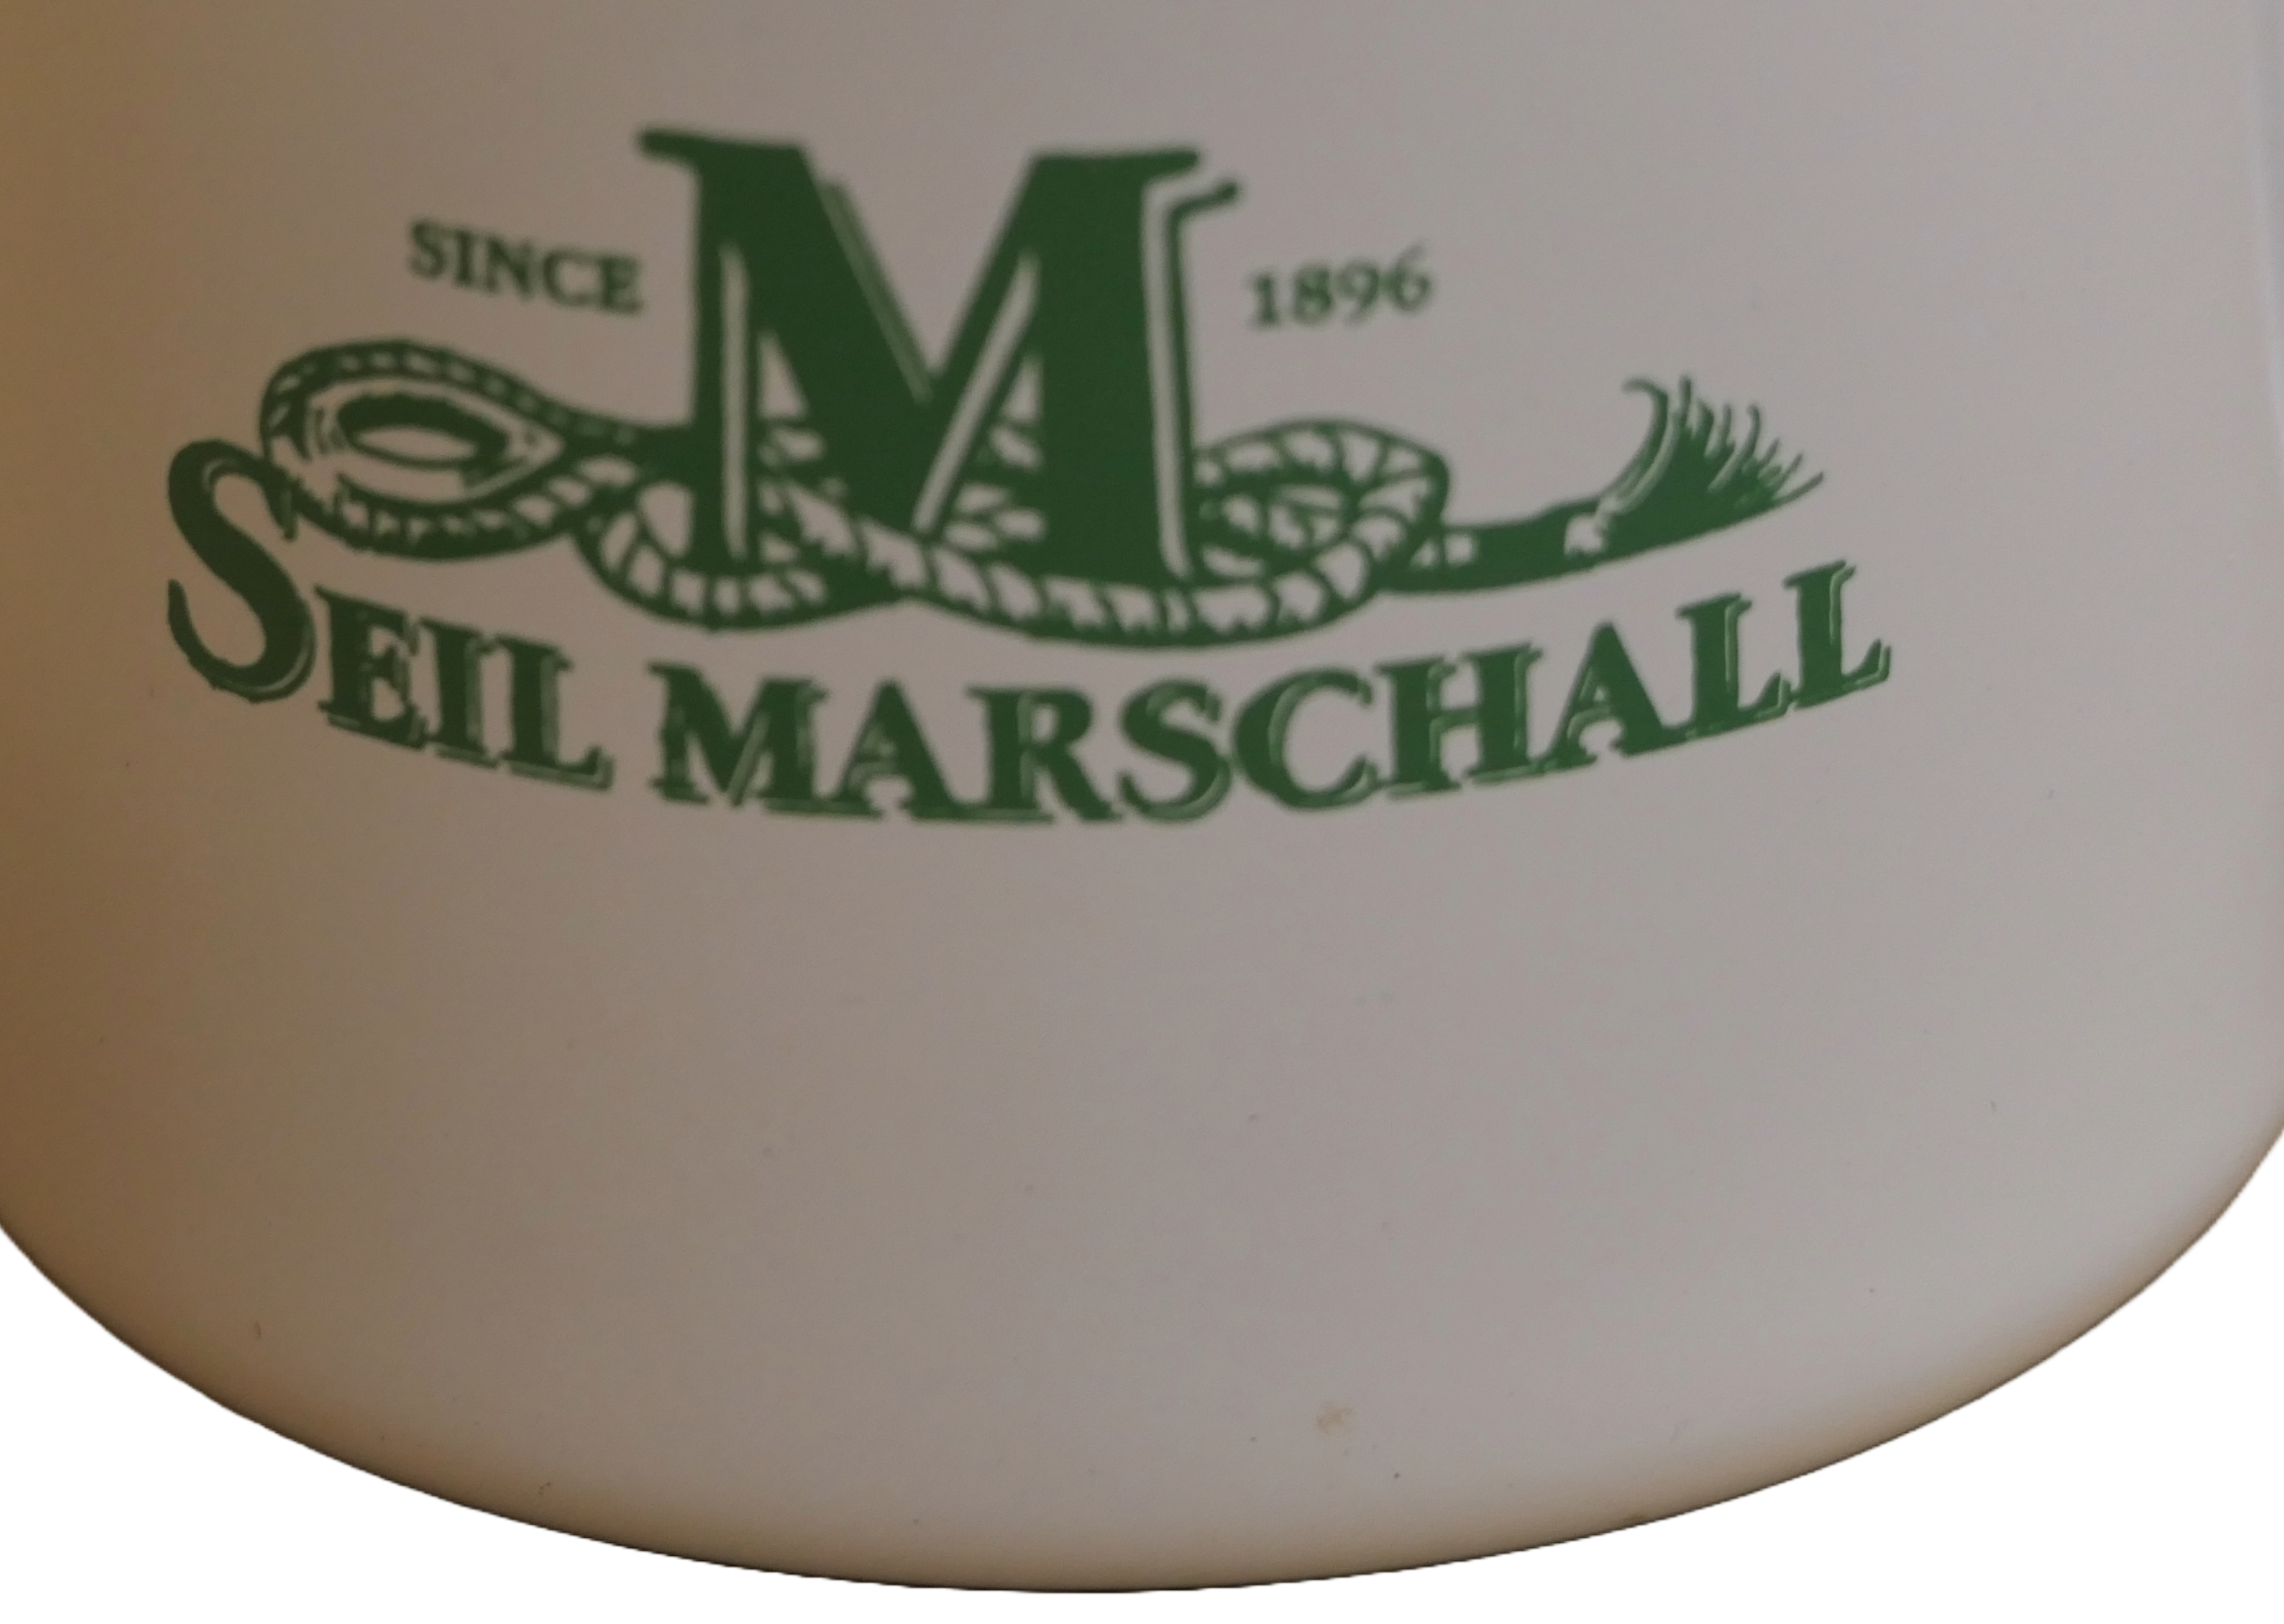 Seil Marschall enamel mug